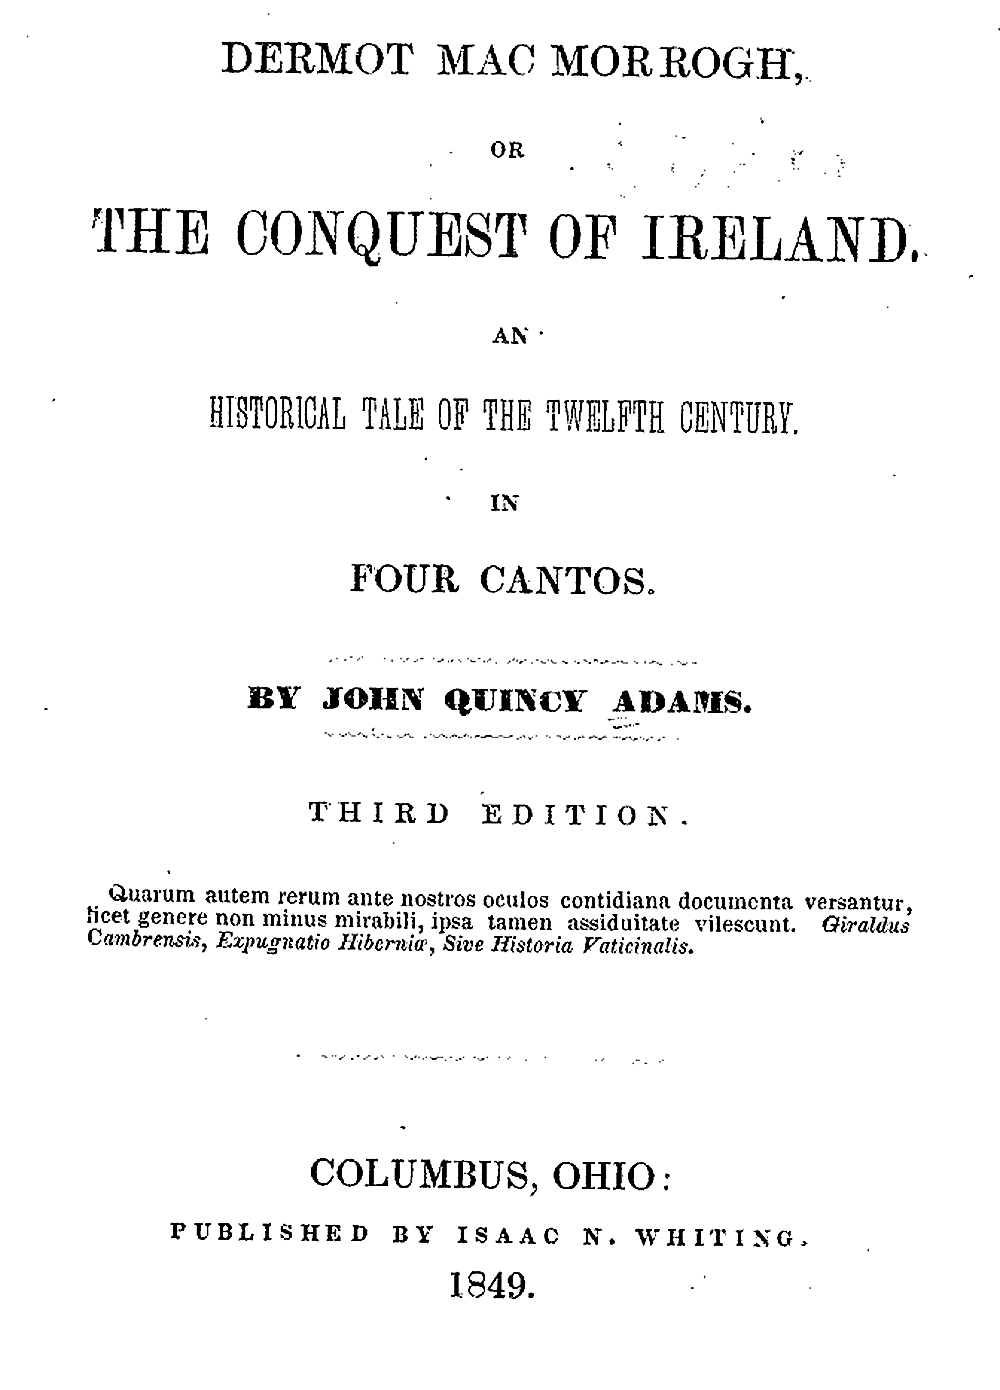 Dermot MacMorrogh, by John Quincy Adams, 1849. University of Michigan Library.